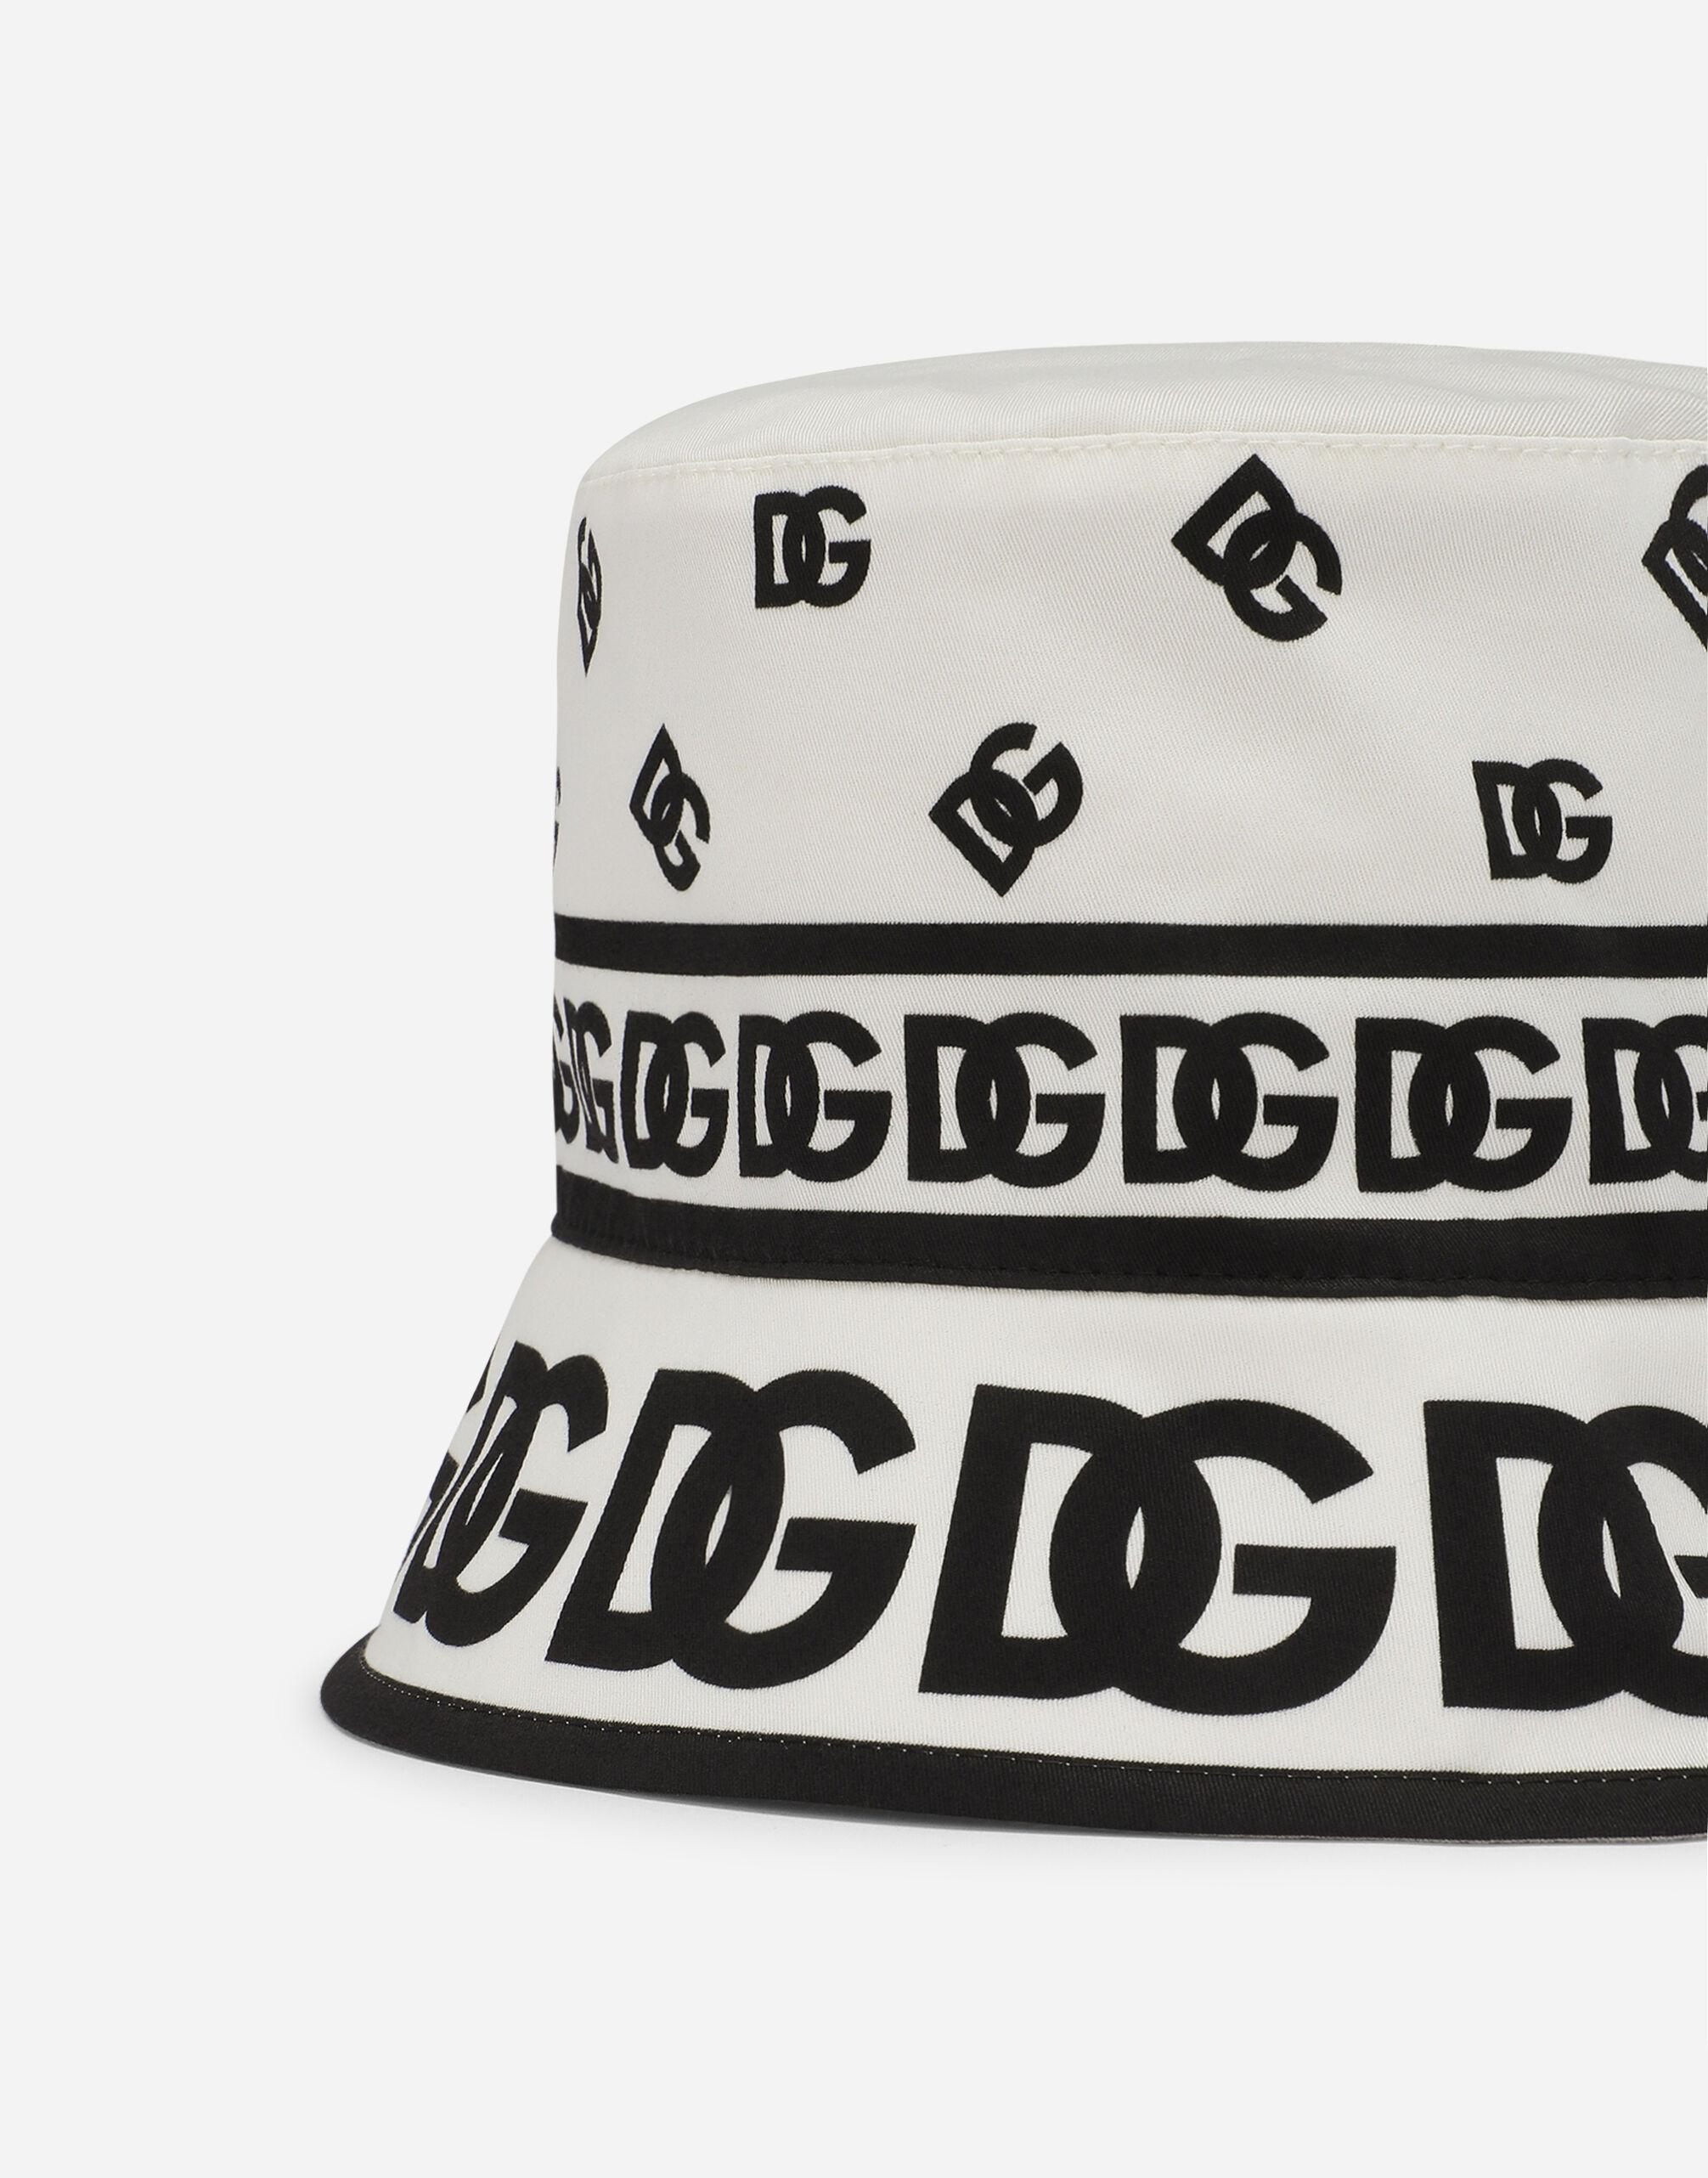 ader Menda City Interpunctie Dolce & Gabbana Bucket Hat With All-over Dg Print for Men | Lyst